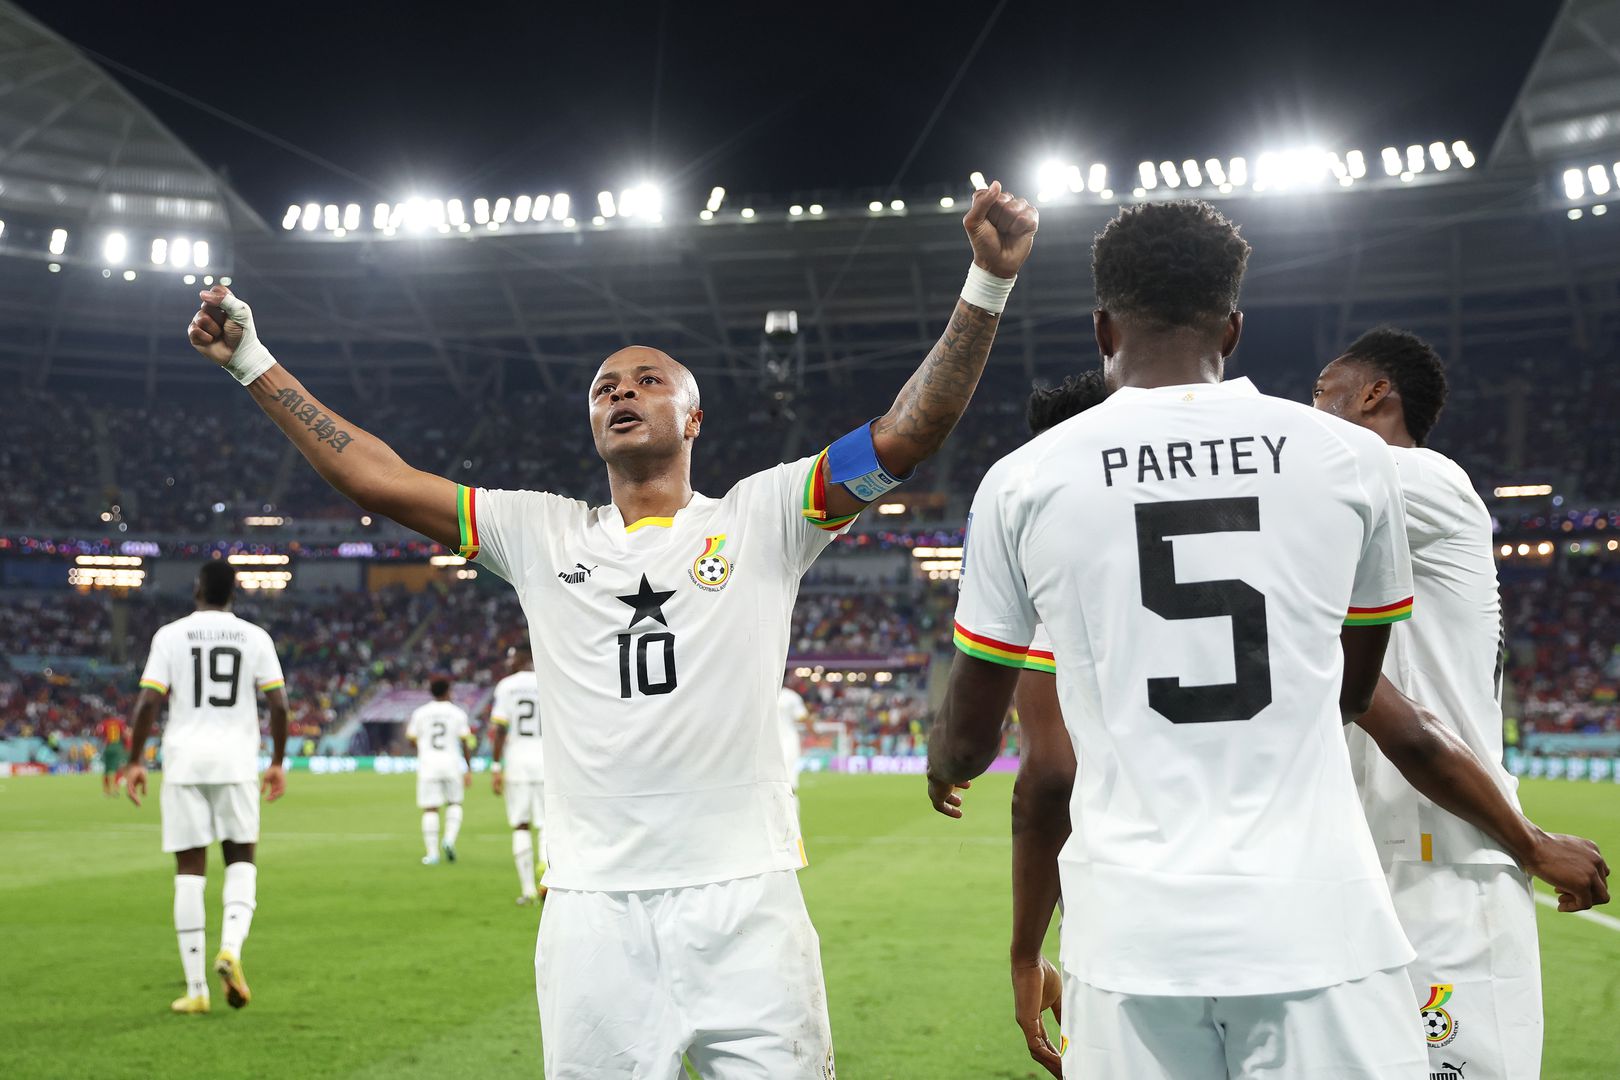  Португалия - Гана 3:2, група 